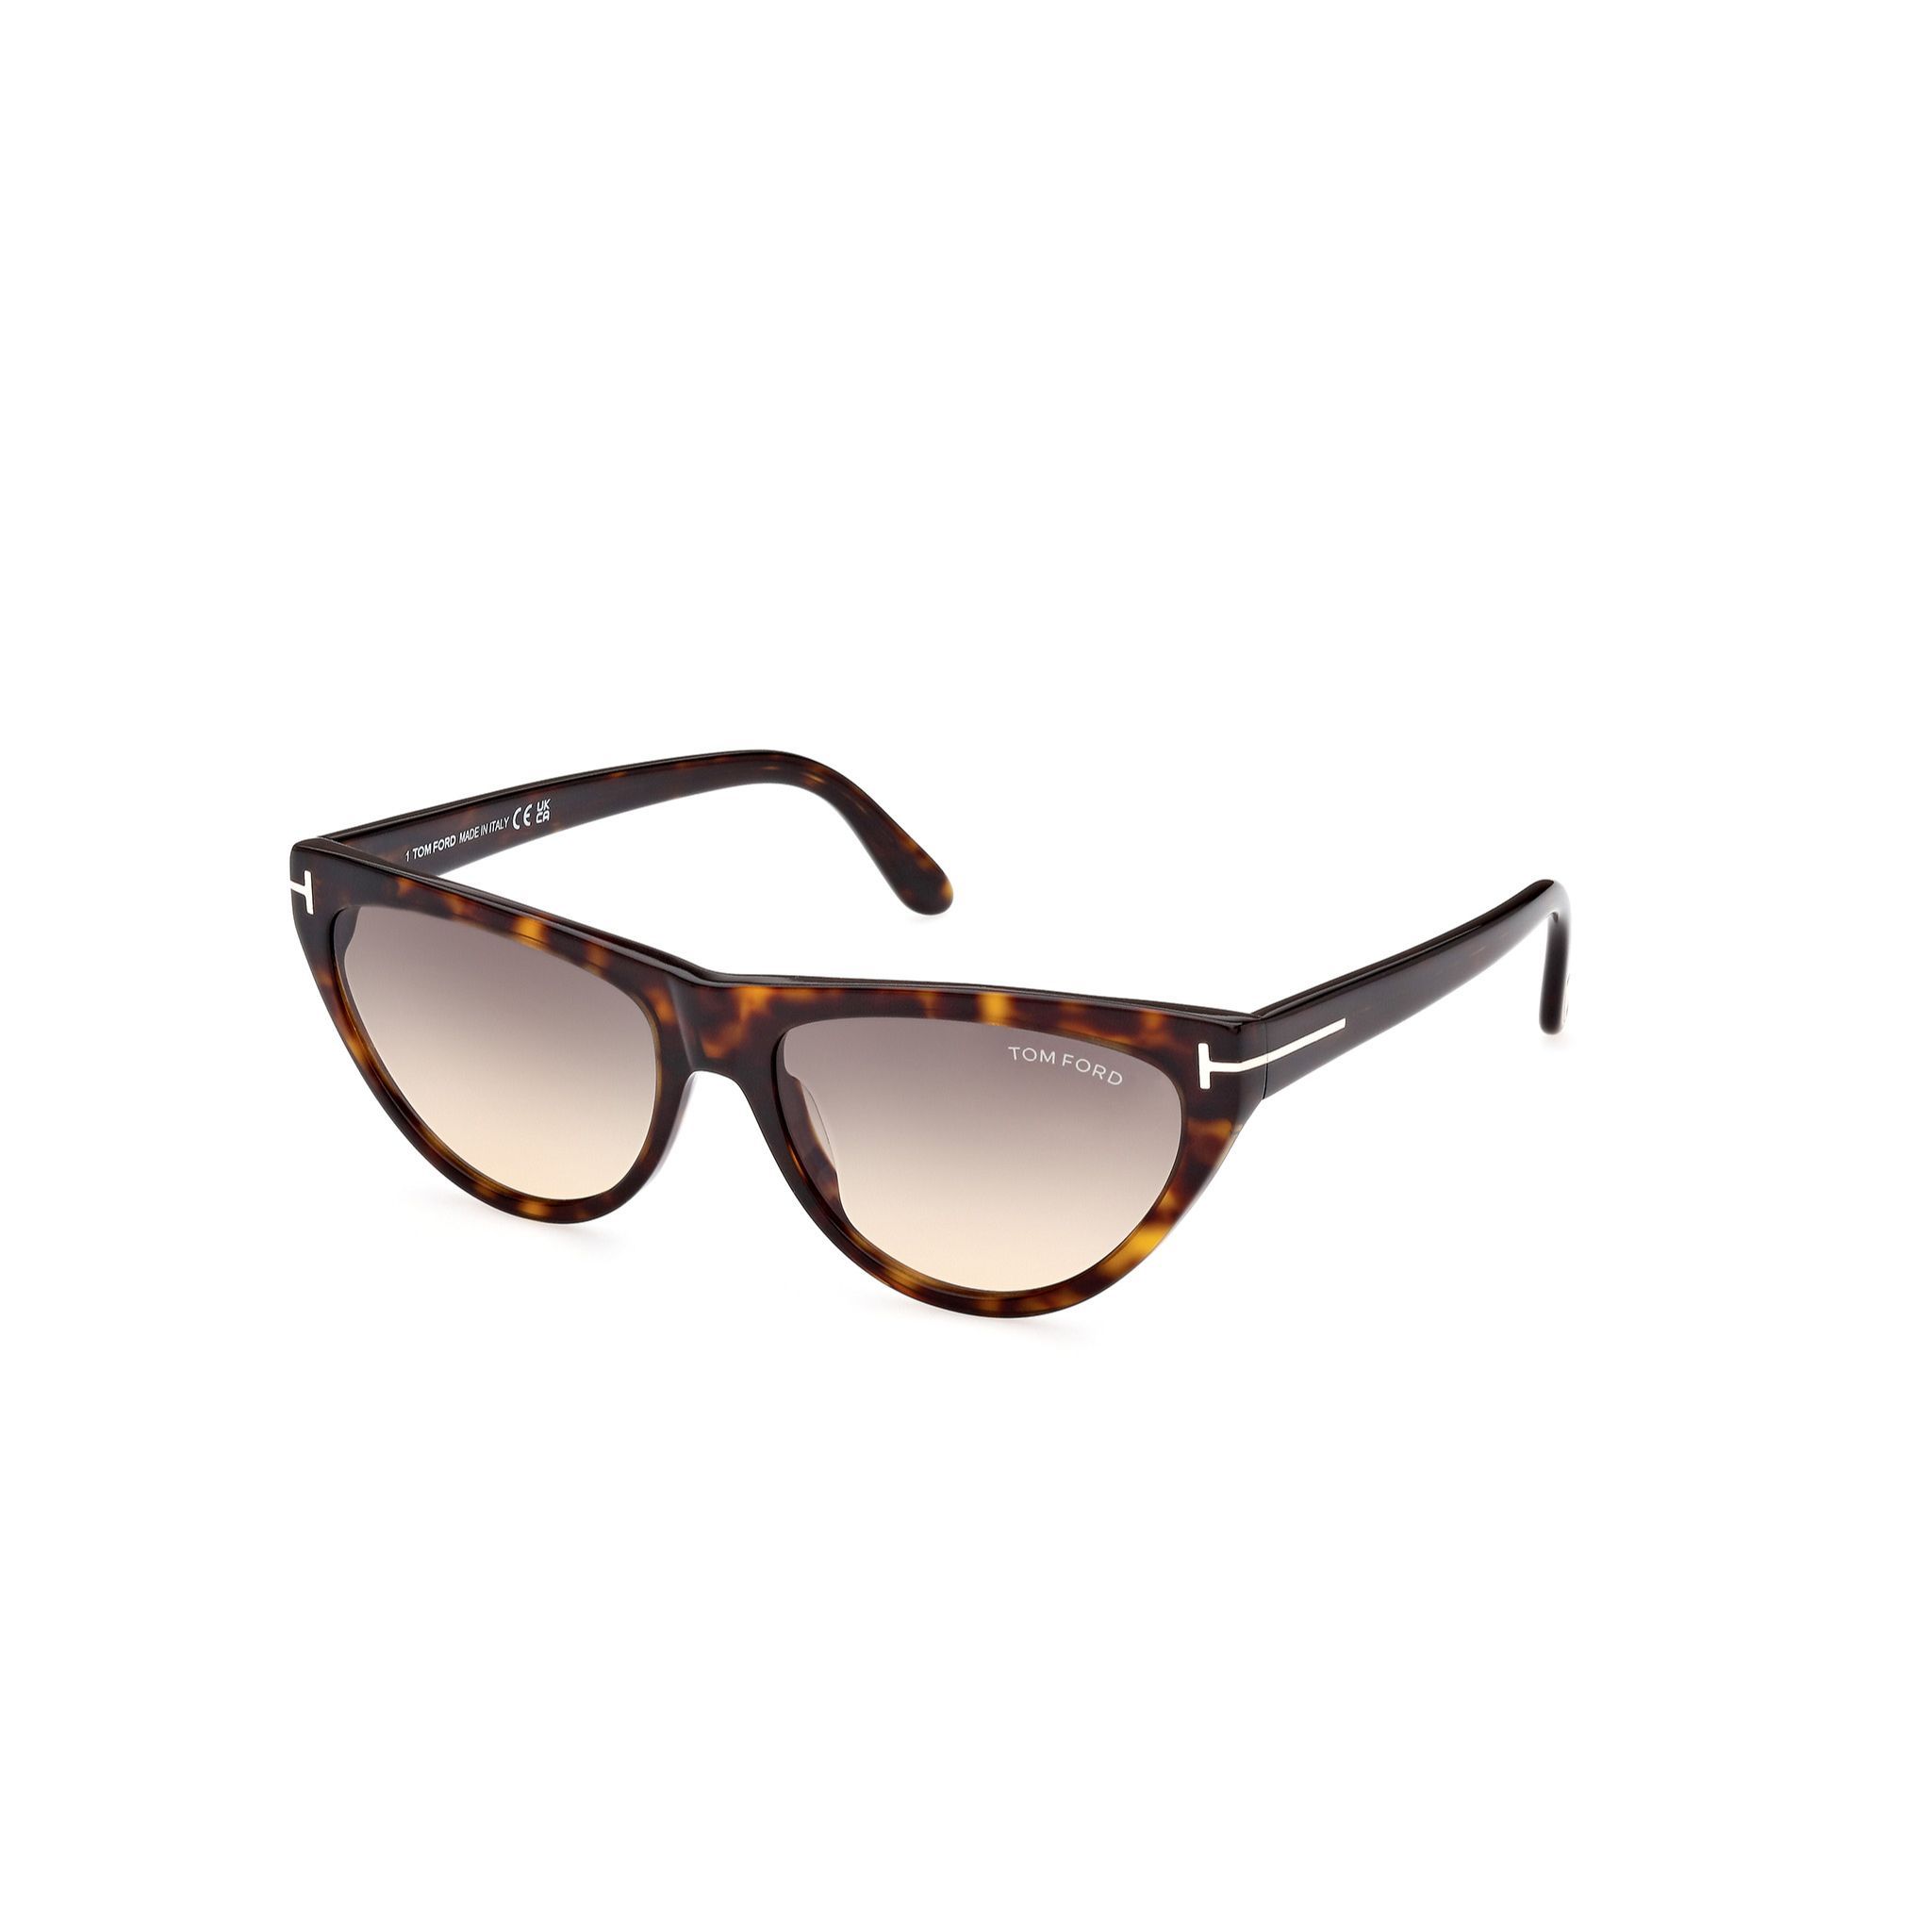  Dark Havana Sunglasses FT0990 52B - size 56